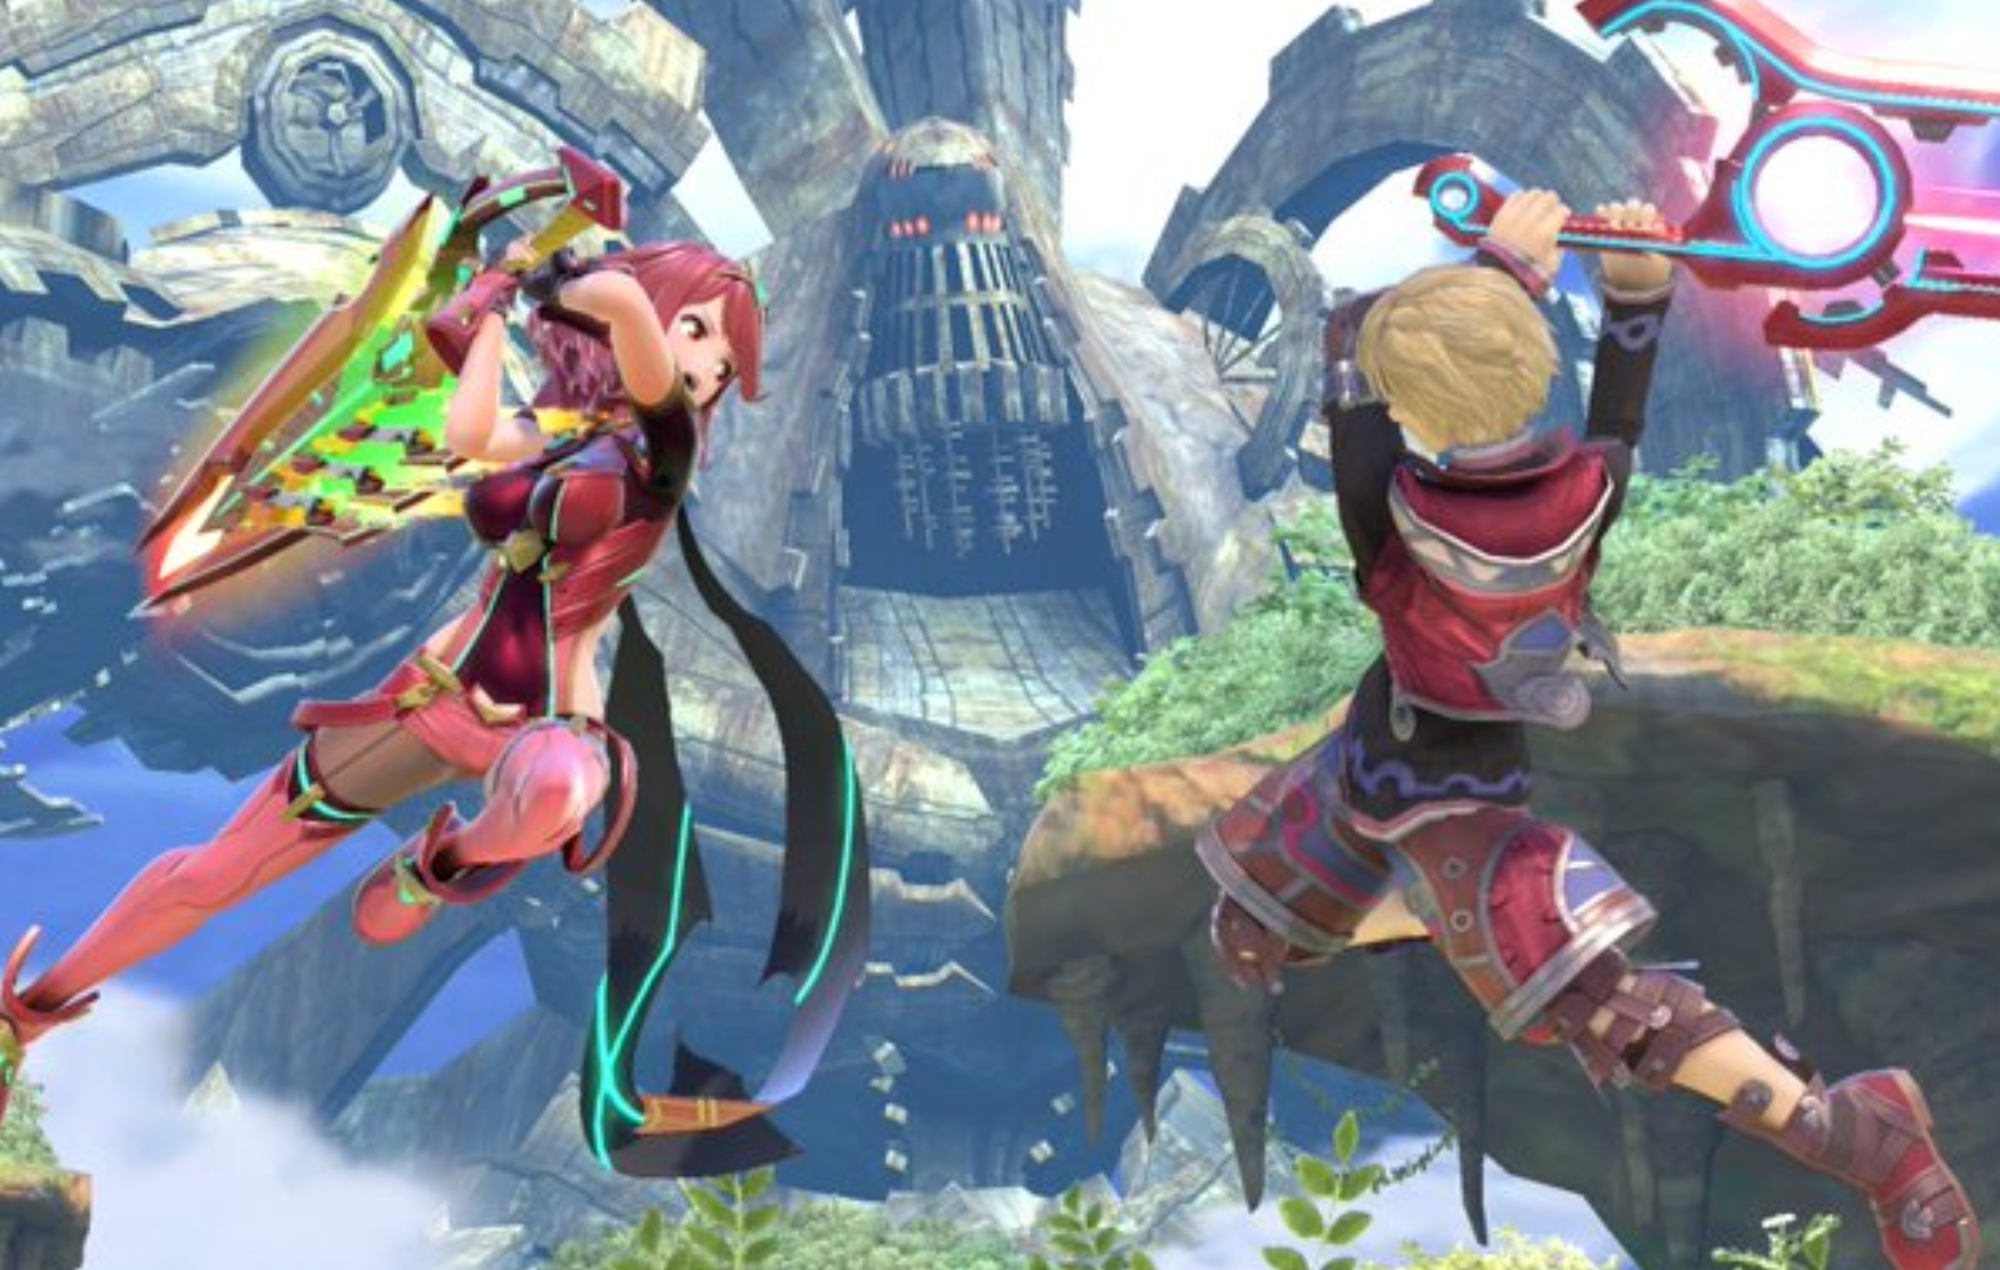 Additional 'Smash Bros. Ultimate' Pyra and Mythra screenshots revealed